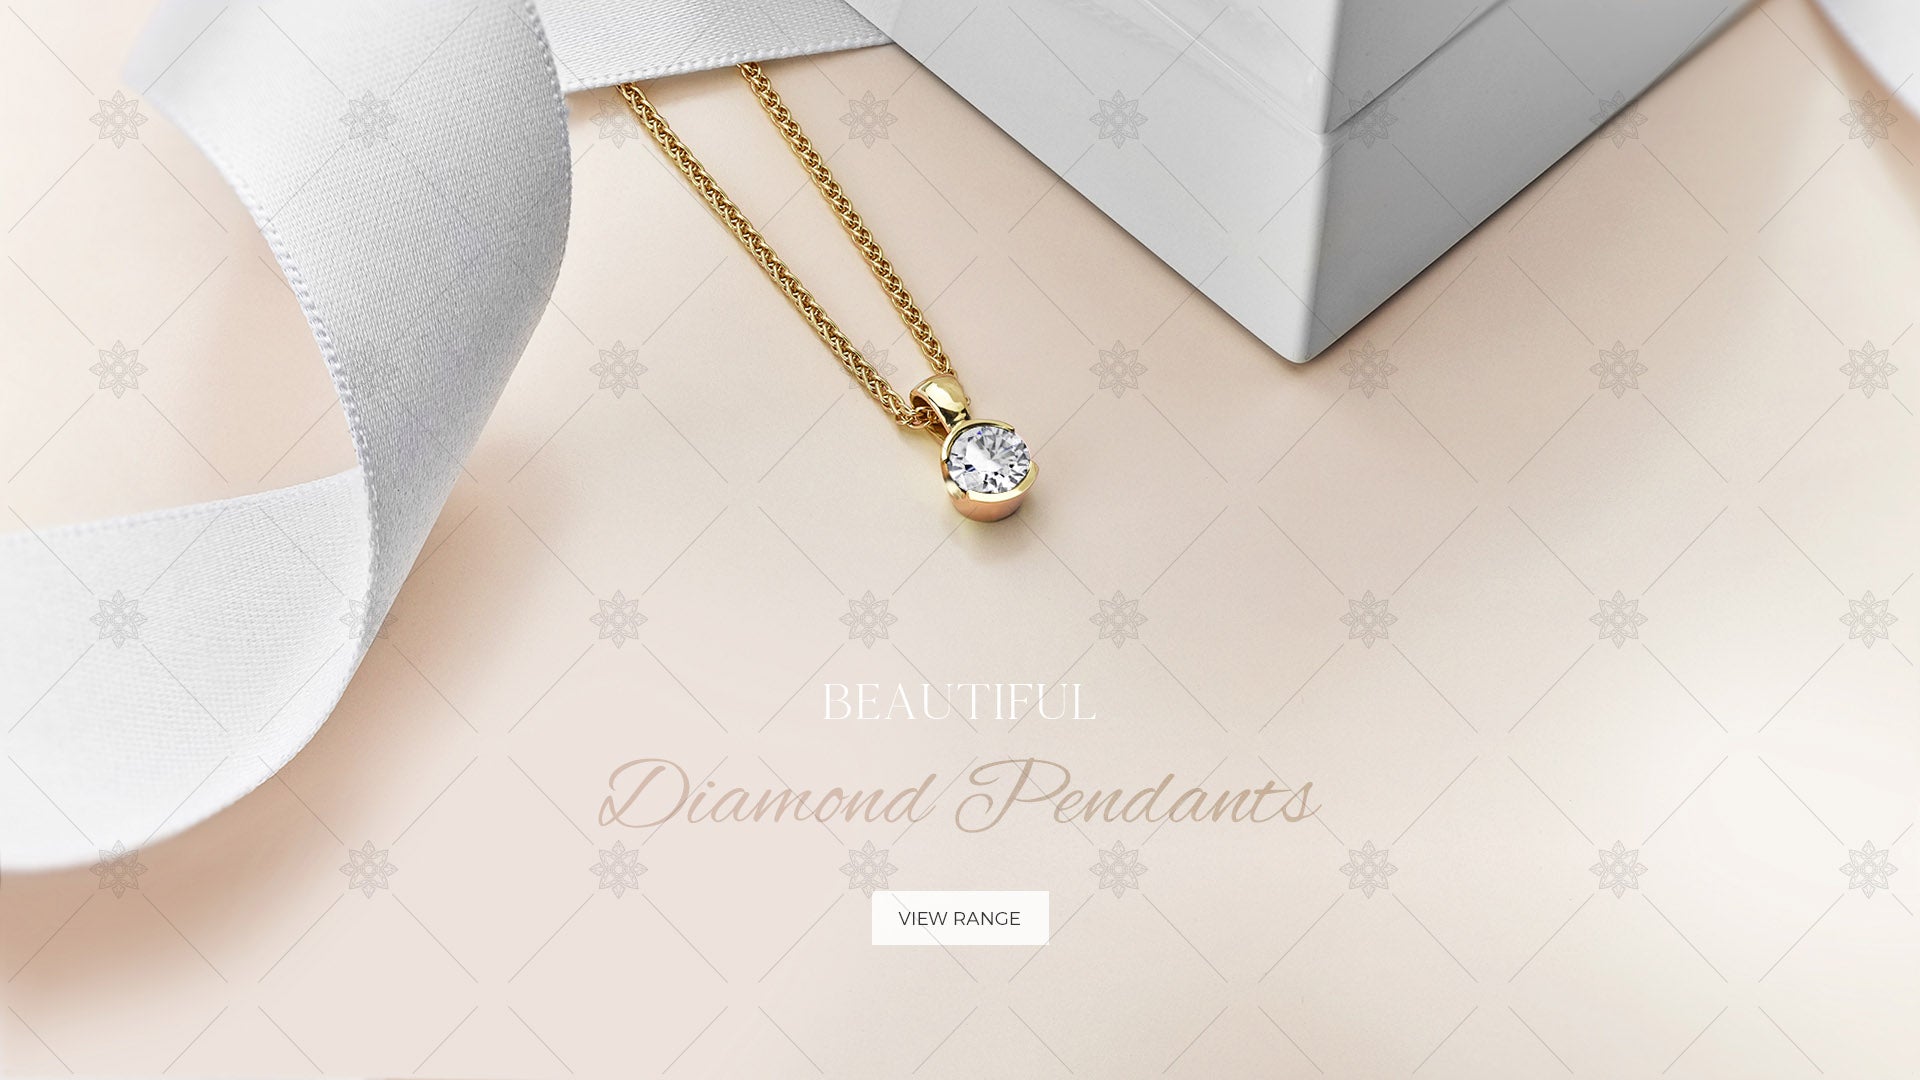 Diamond Pendants website banner